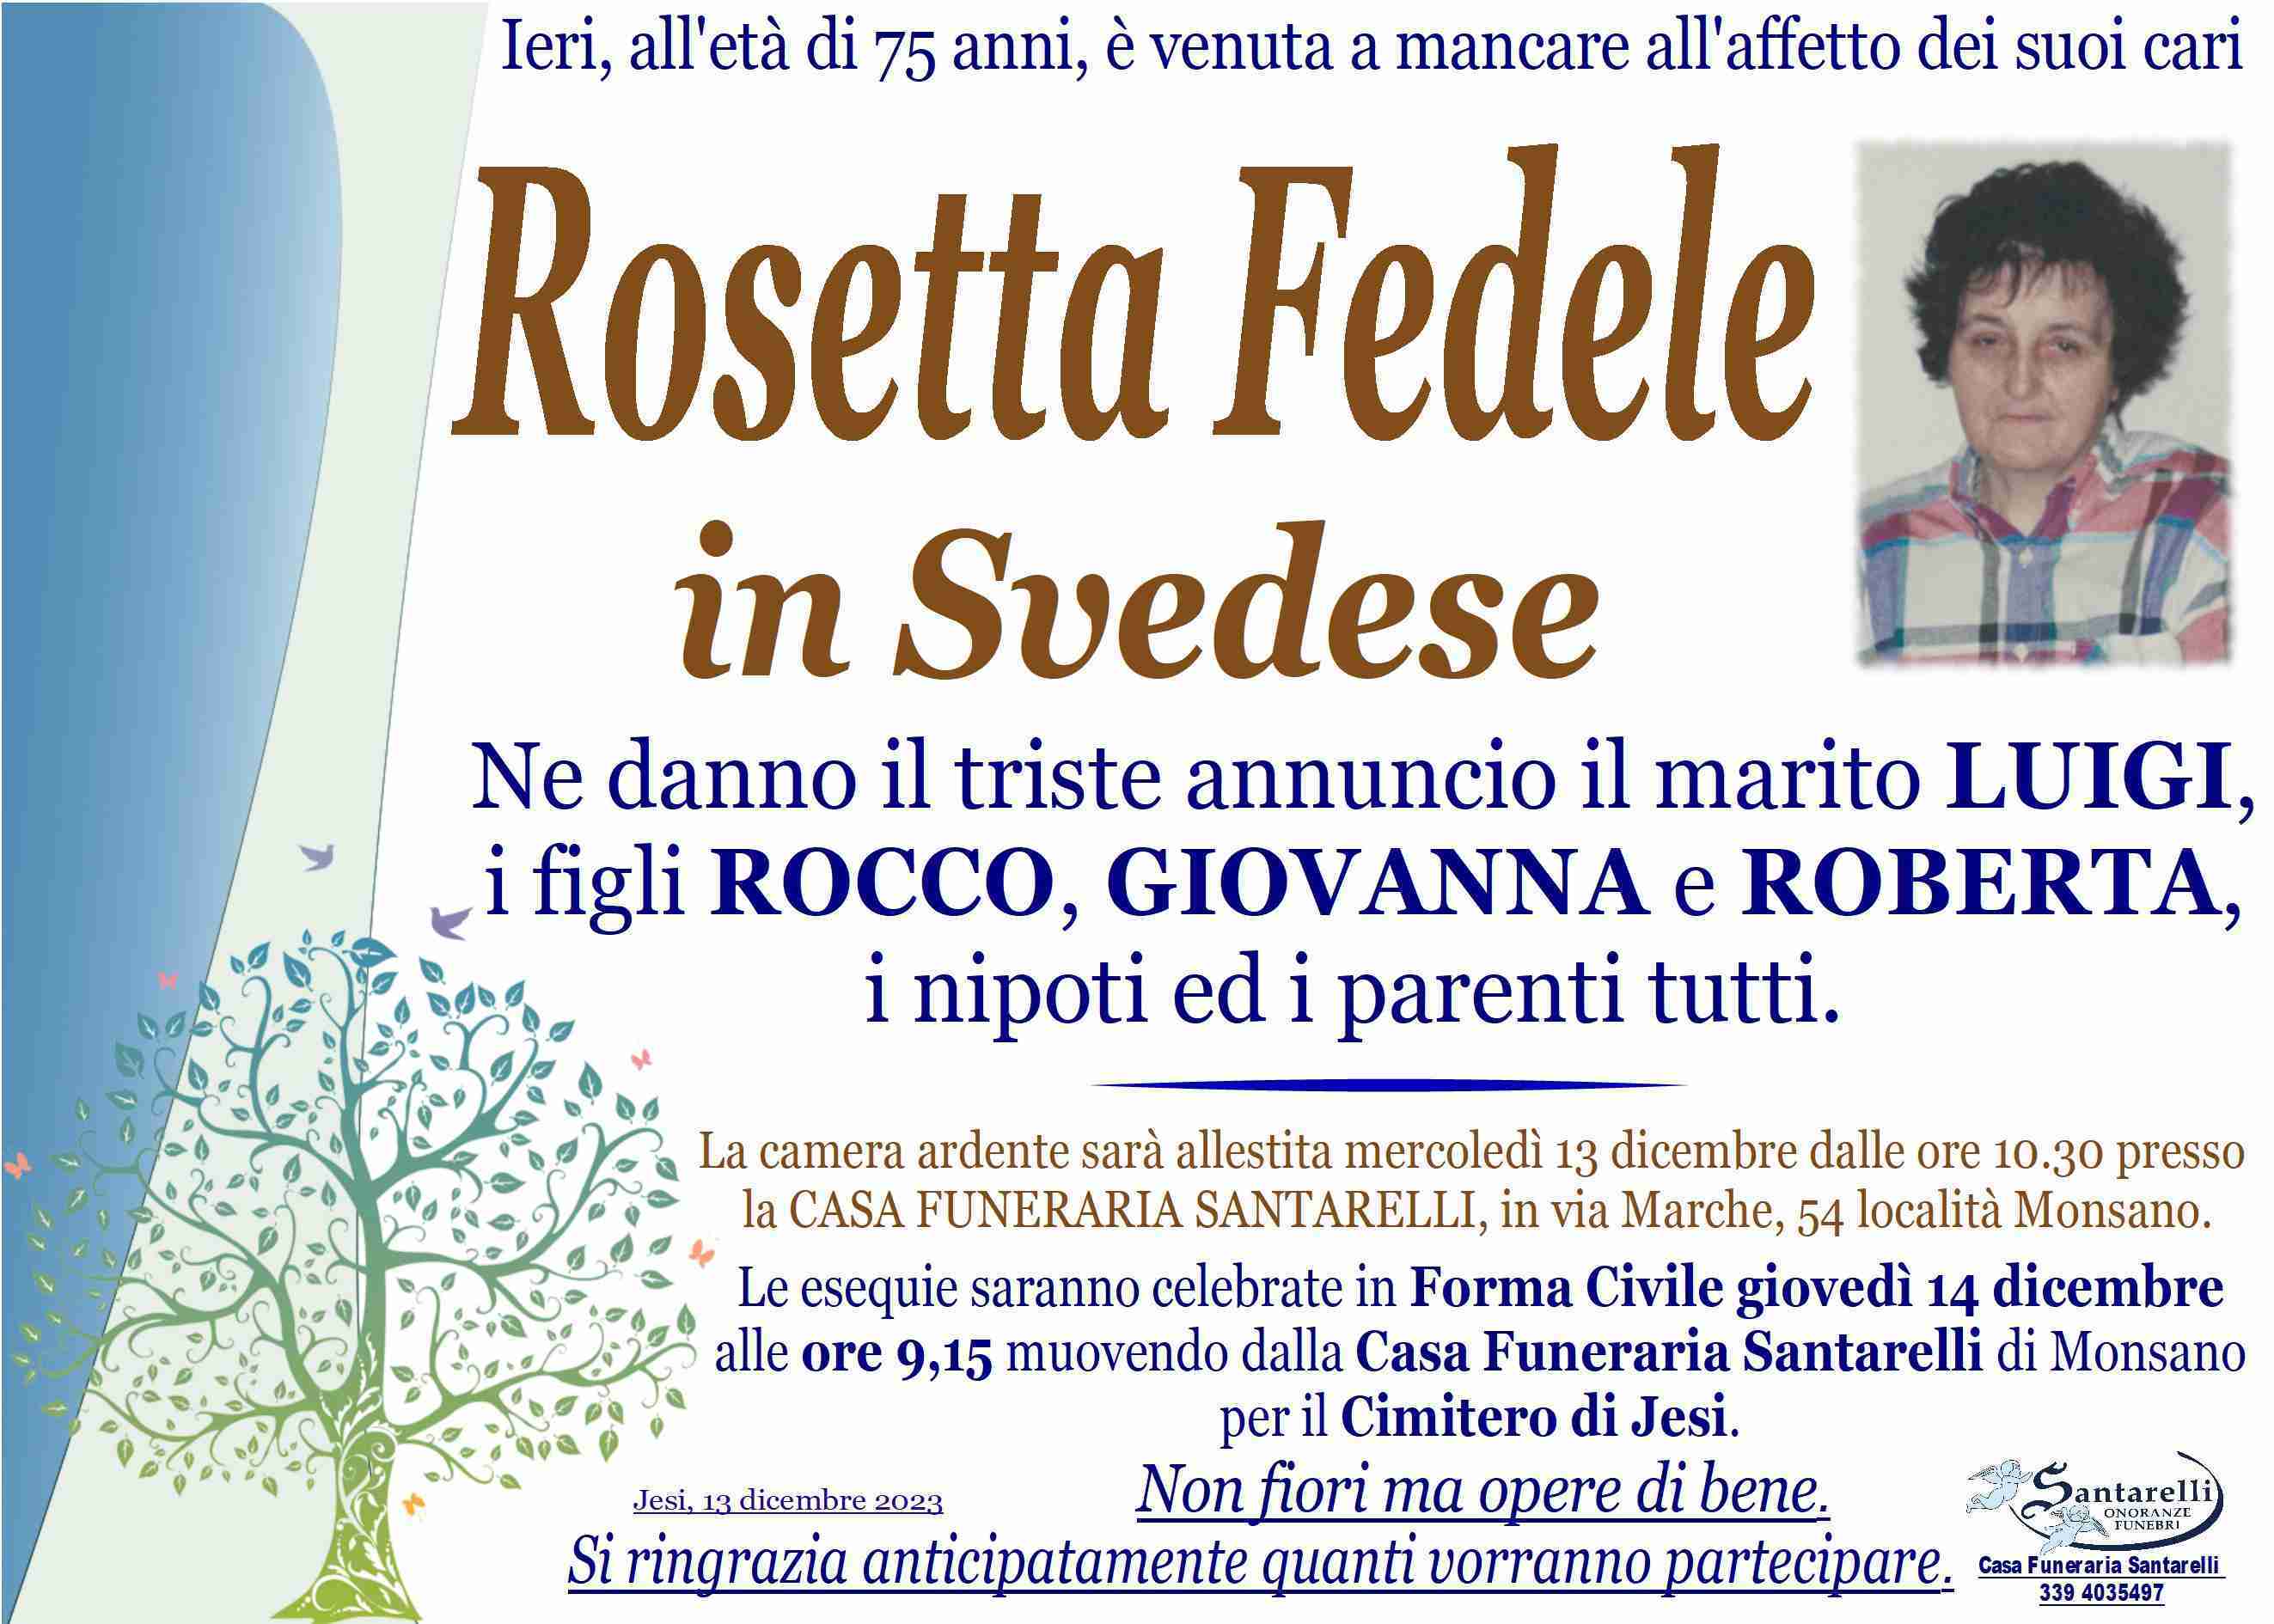 Rosetta Fedele